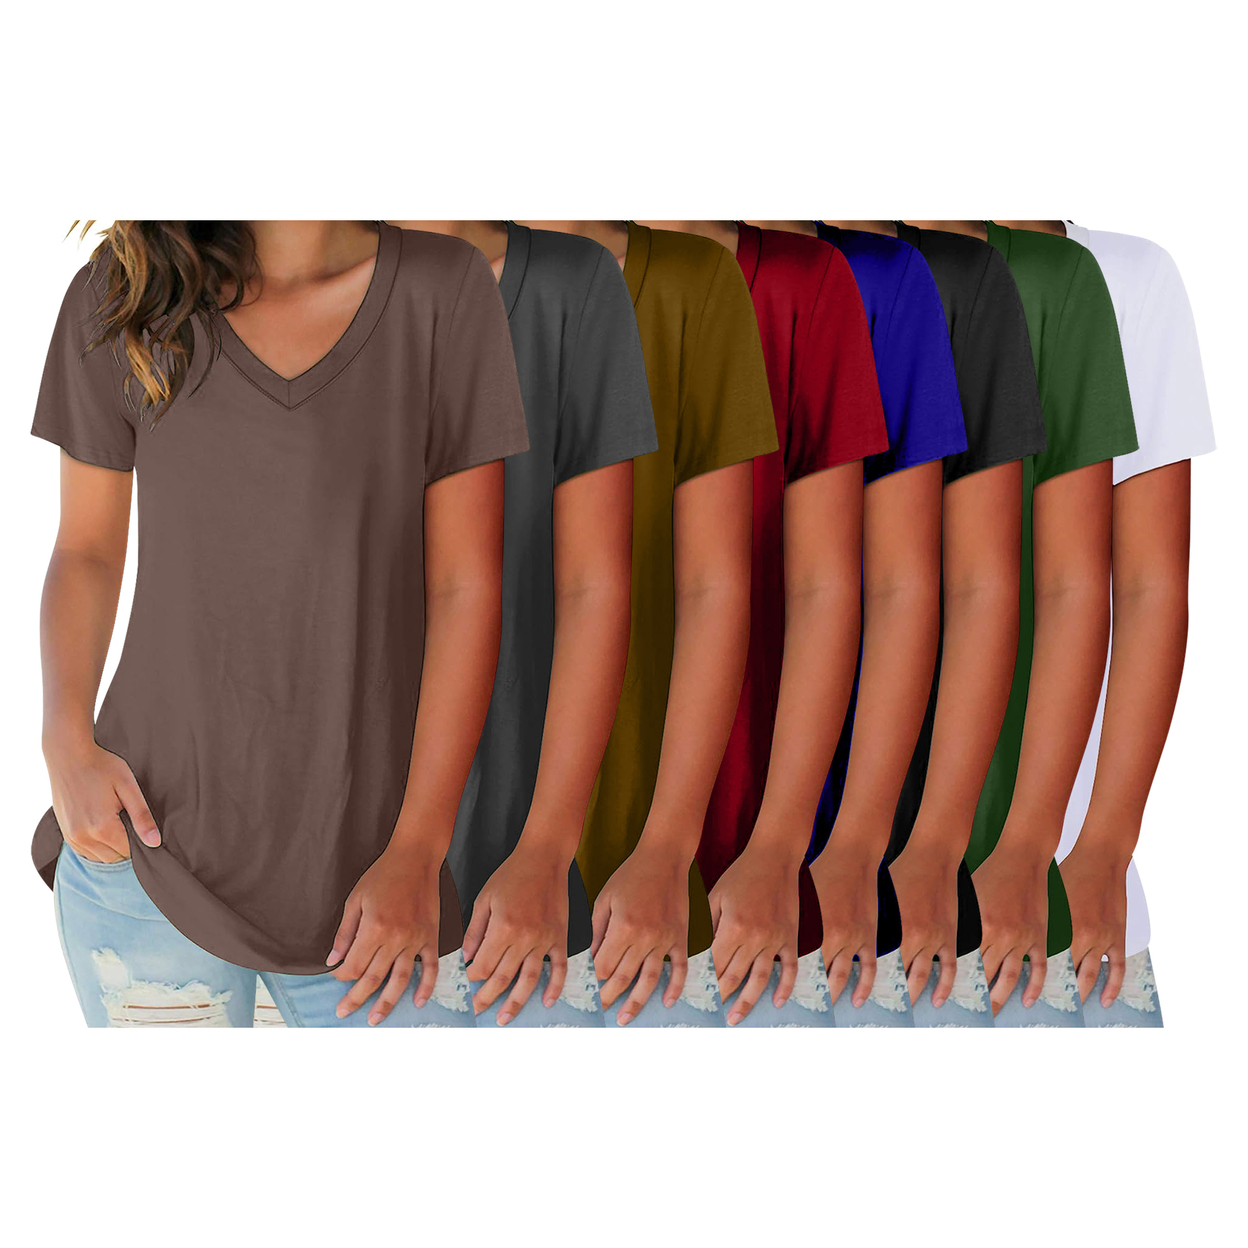 2-Pack: Women's Ultra Soft Smooth Cotton Blend Basic V-Neck Short Sleeve Shirts - Black & Green, Large